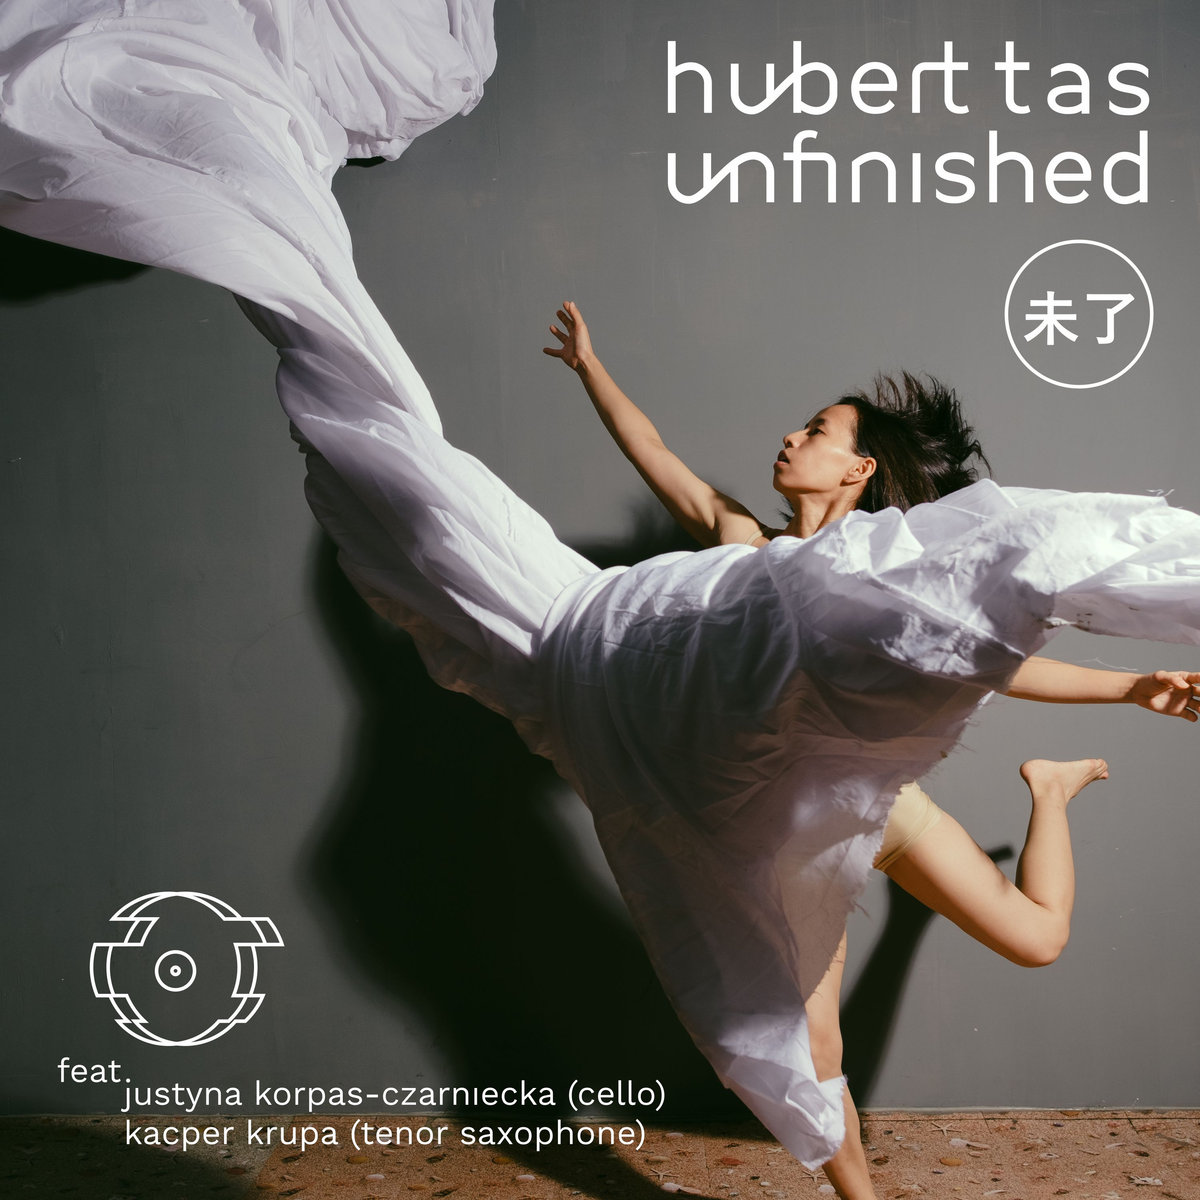 Hubert Tas – Unfinished / 未了